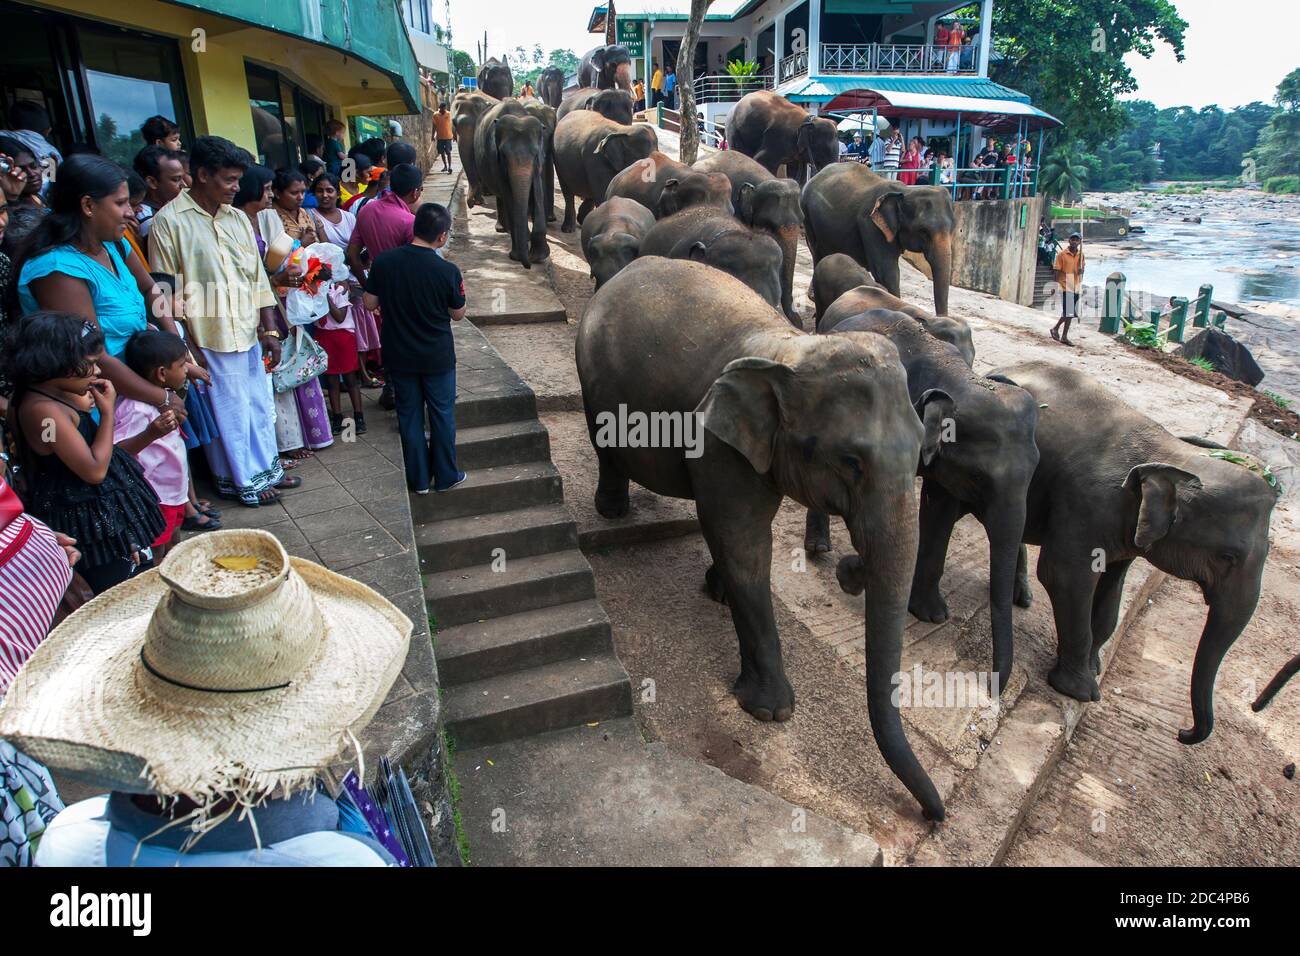 Elephants from the Pinnawala Elephant Orphanage in Sri Lanka head down a street past tourists towards the Maha Oya River where they will bathe. Stock Photo